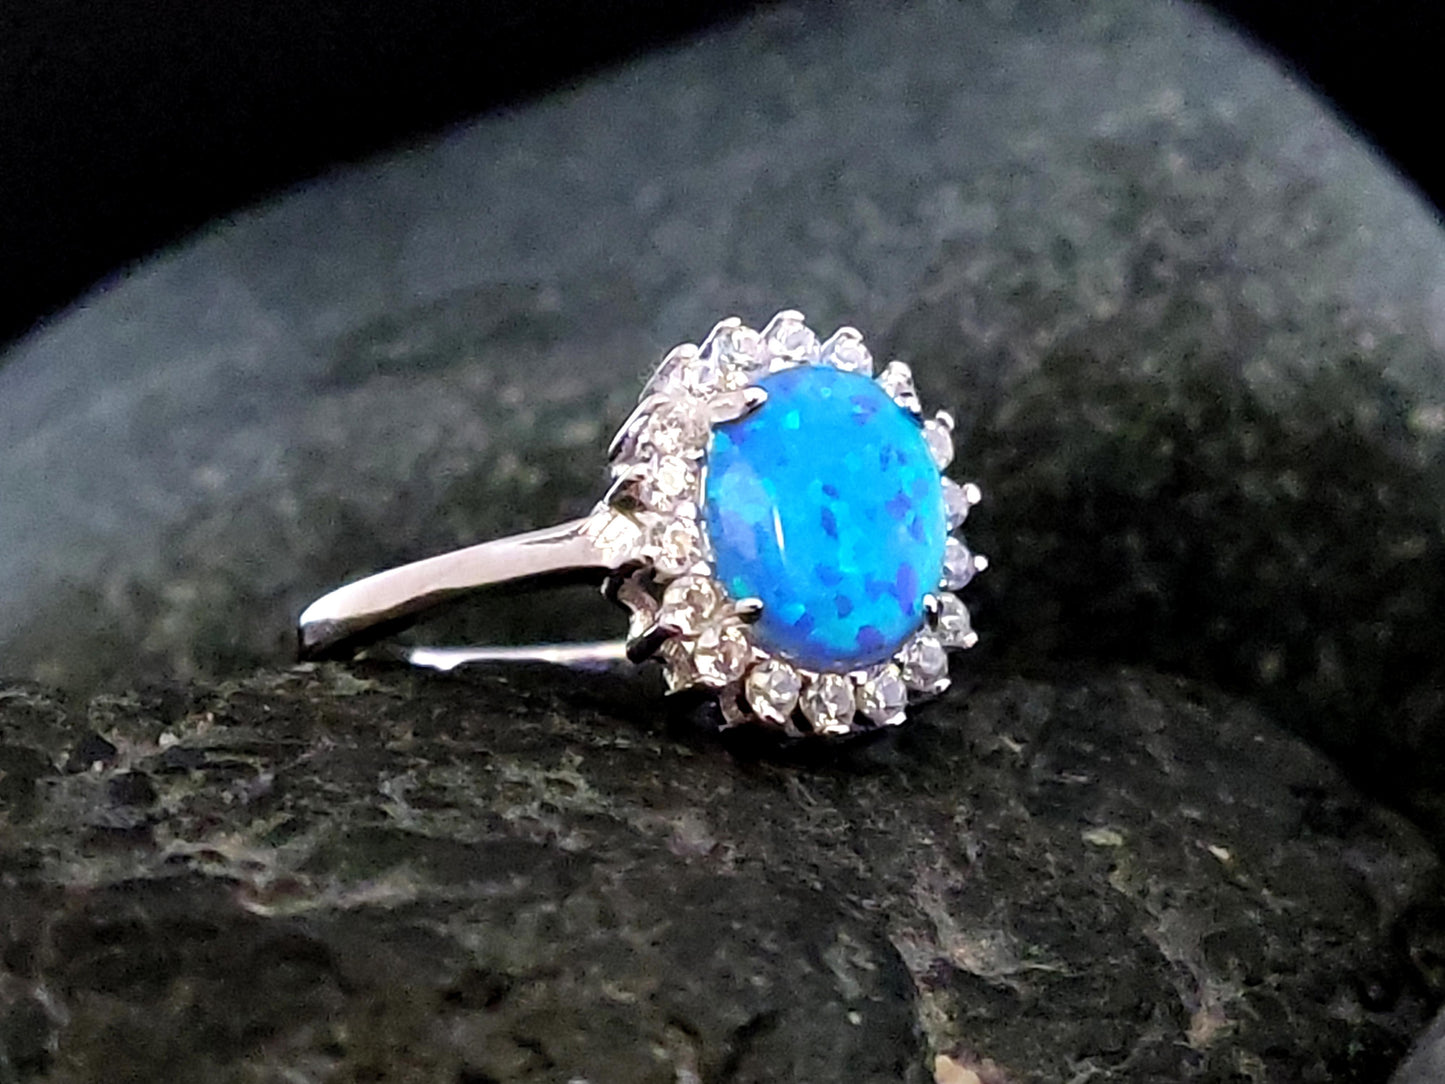 blue opal rosetta silver ring made in Greece on a black rock.